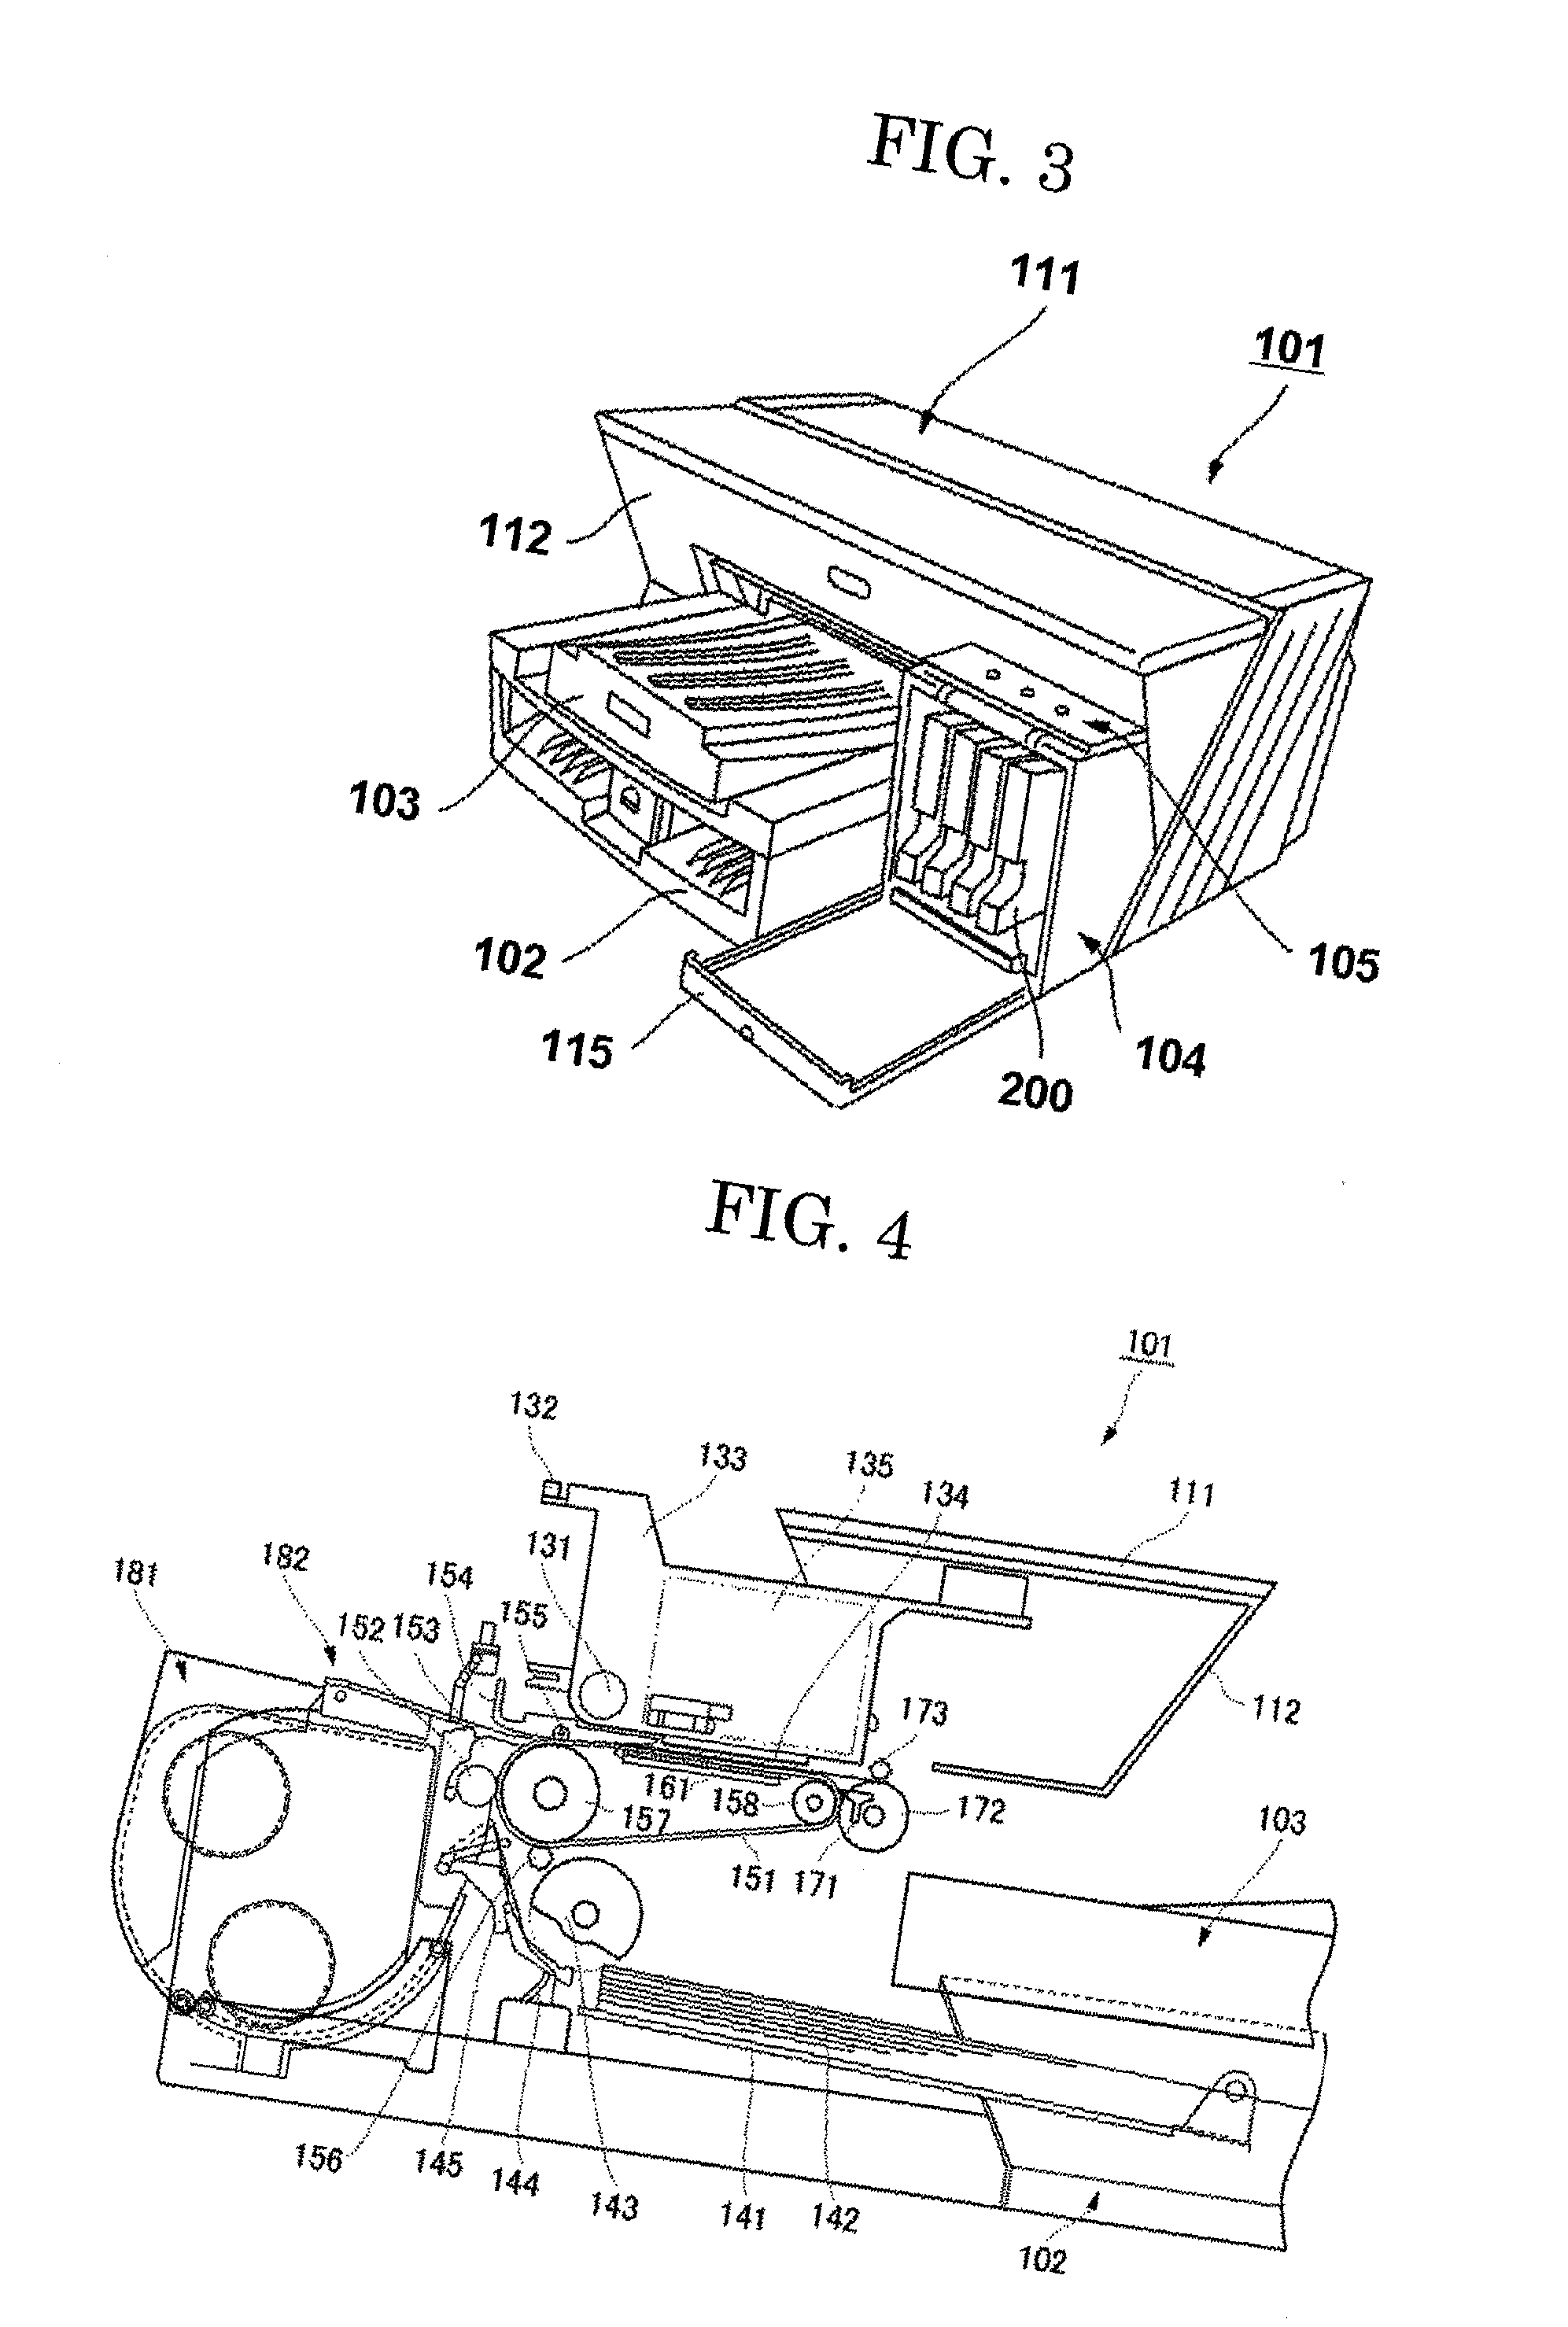 Inkjet recording ink containing fluorine based surfactant, inkjet recording ink set, and inkjet recording apparatus containing the inkjet recording ink